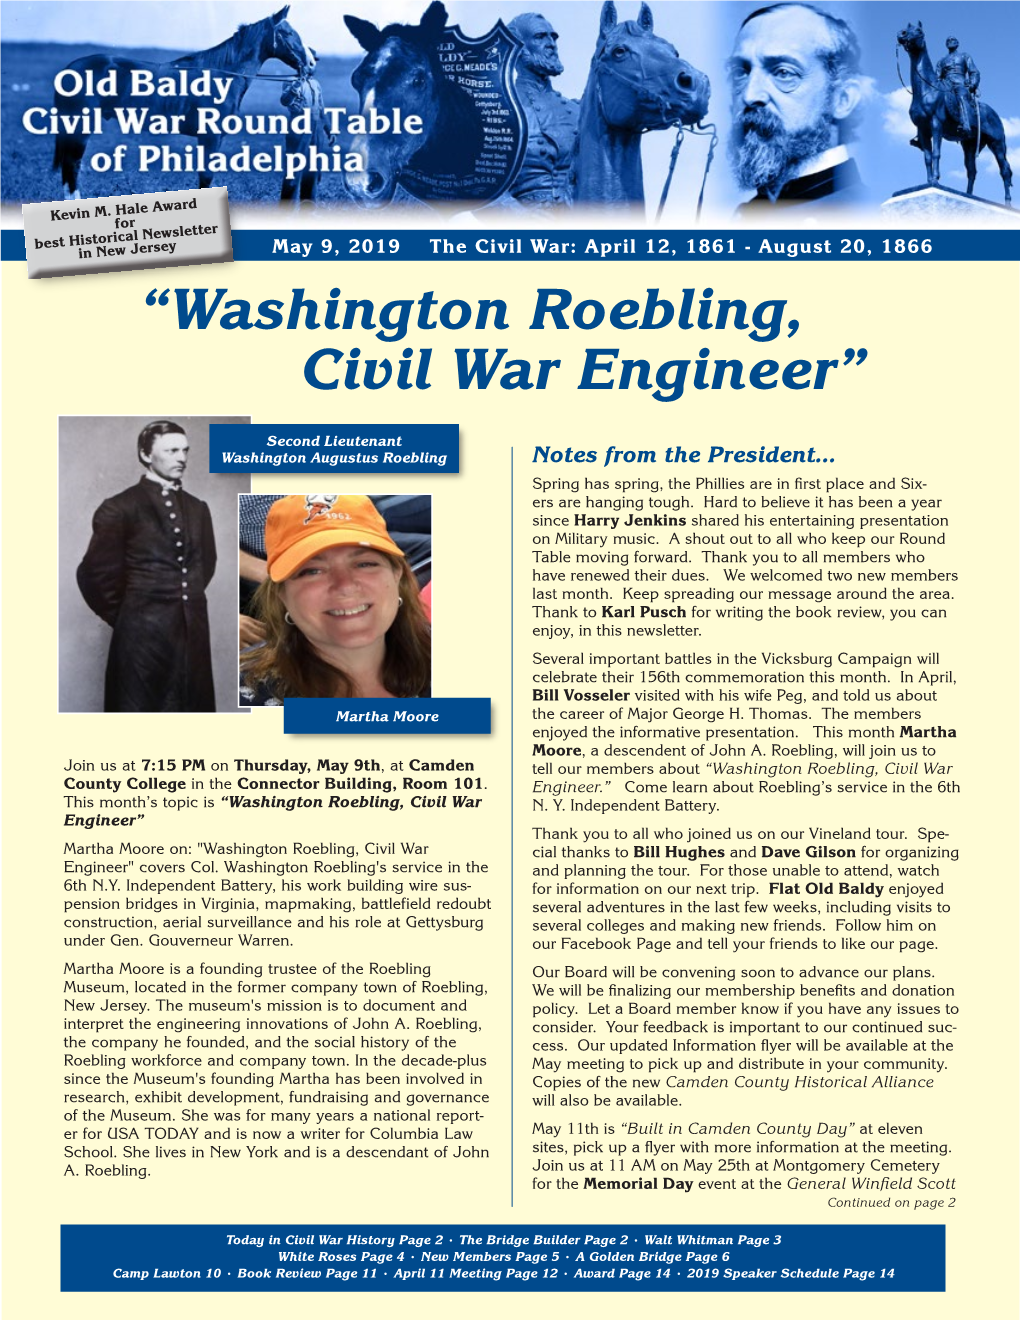 “Washington Roebling, Civil War Engineer”